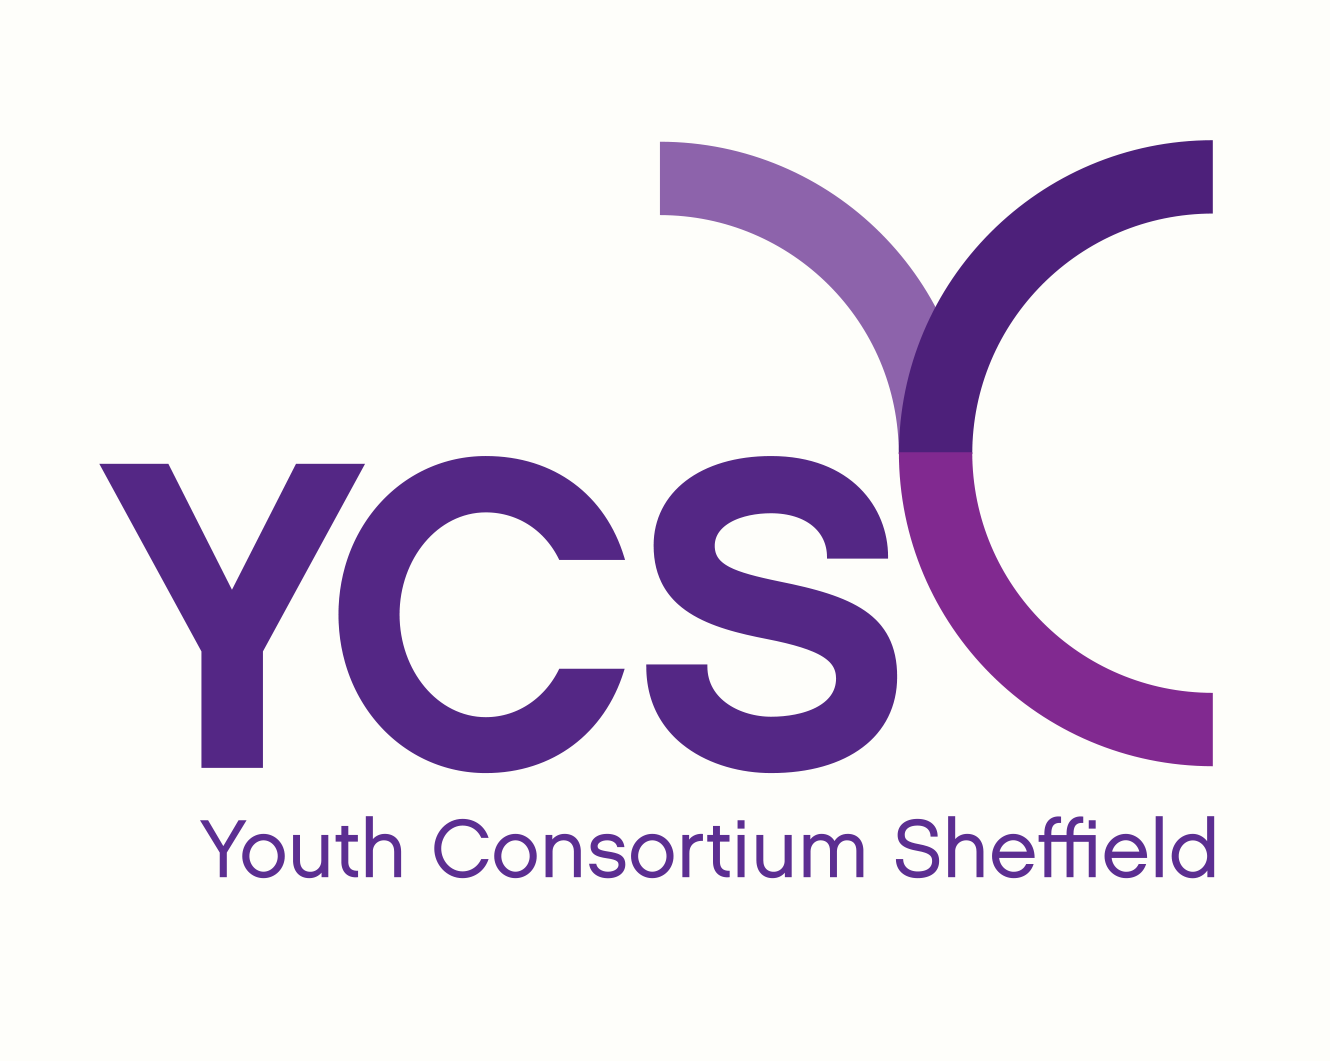 YCS logo and branding